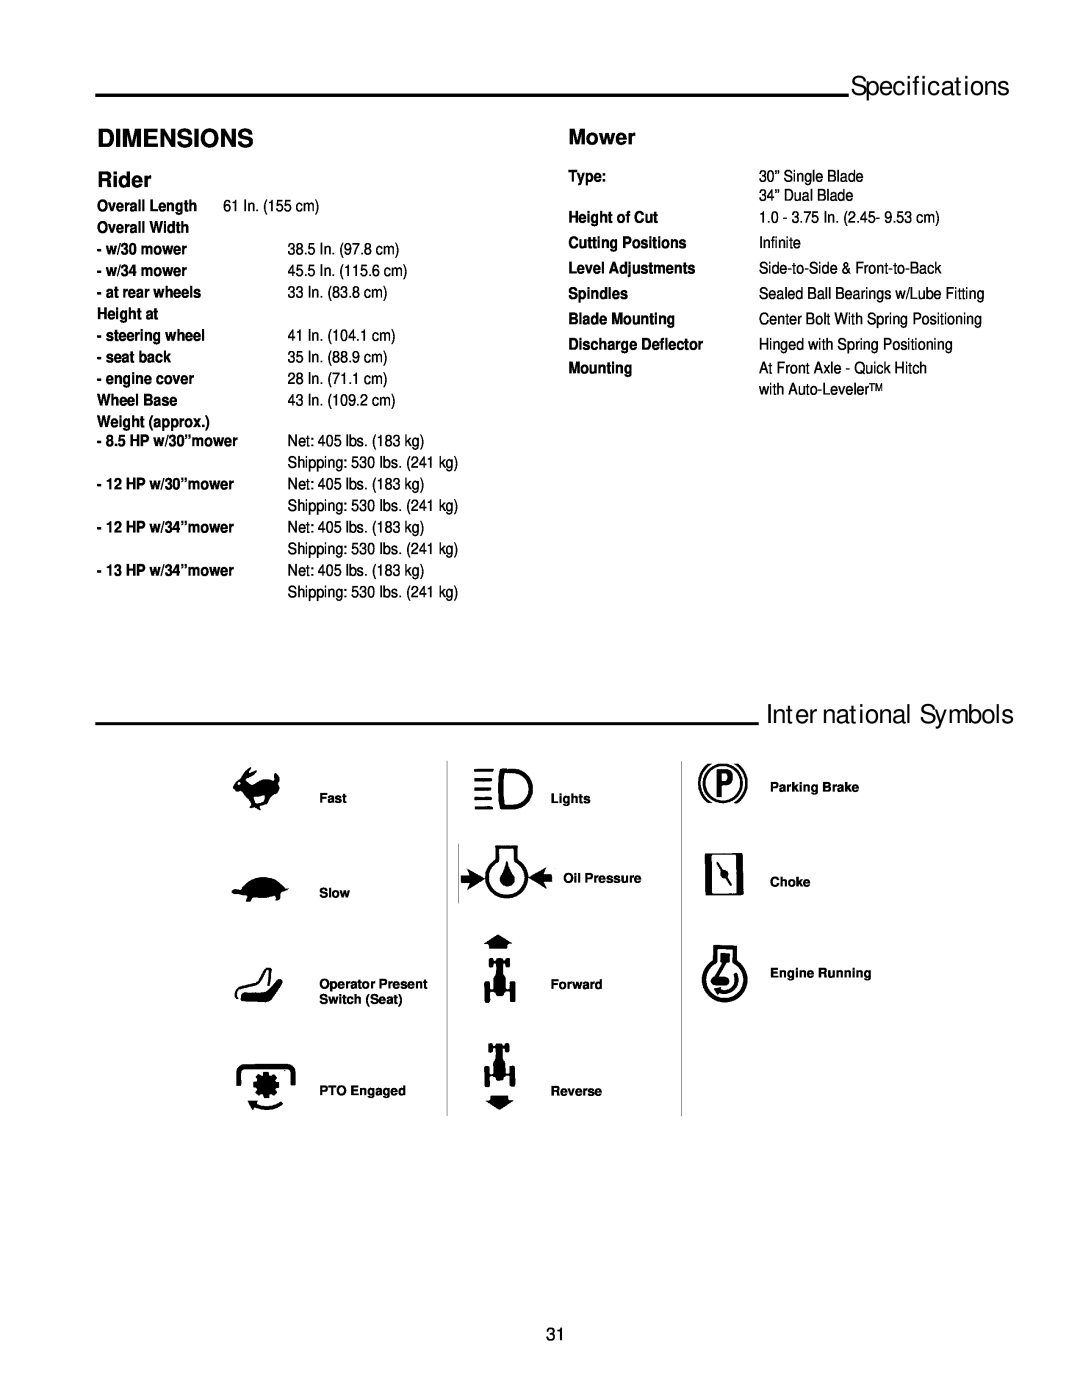 Simplicity 11HP, 14HP manual International Symbols, Dimensions, Mower, Rider, Specifications 